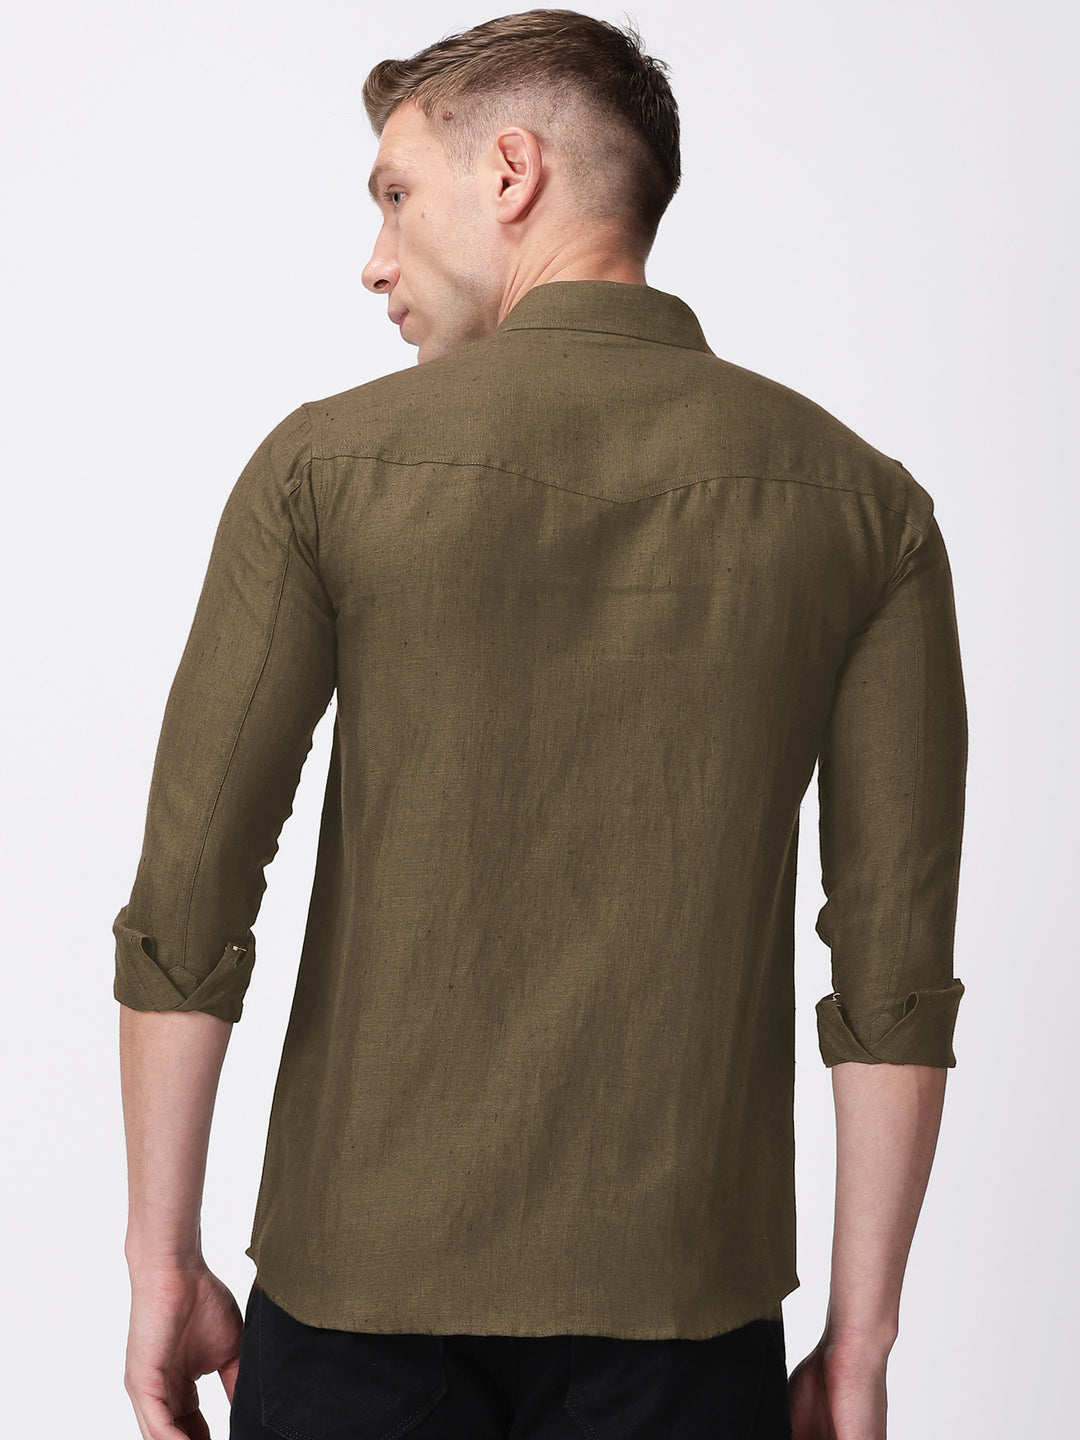 Thomas - Pure Linen Double Pocket Full Sleeve Shirt - Hazelnut Brown